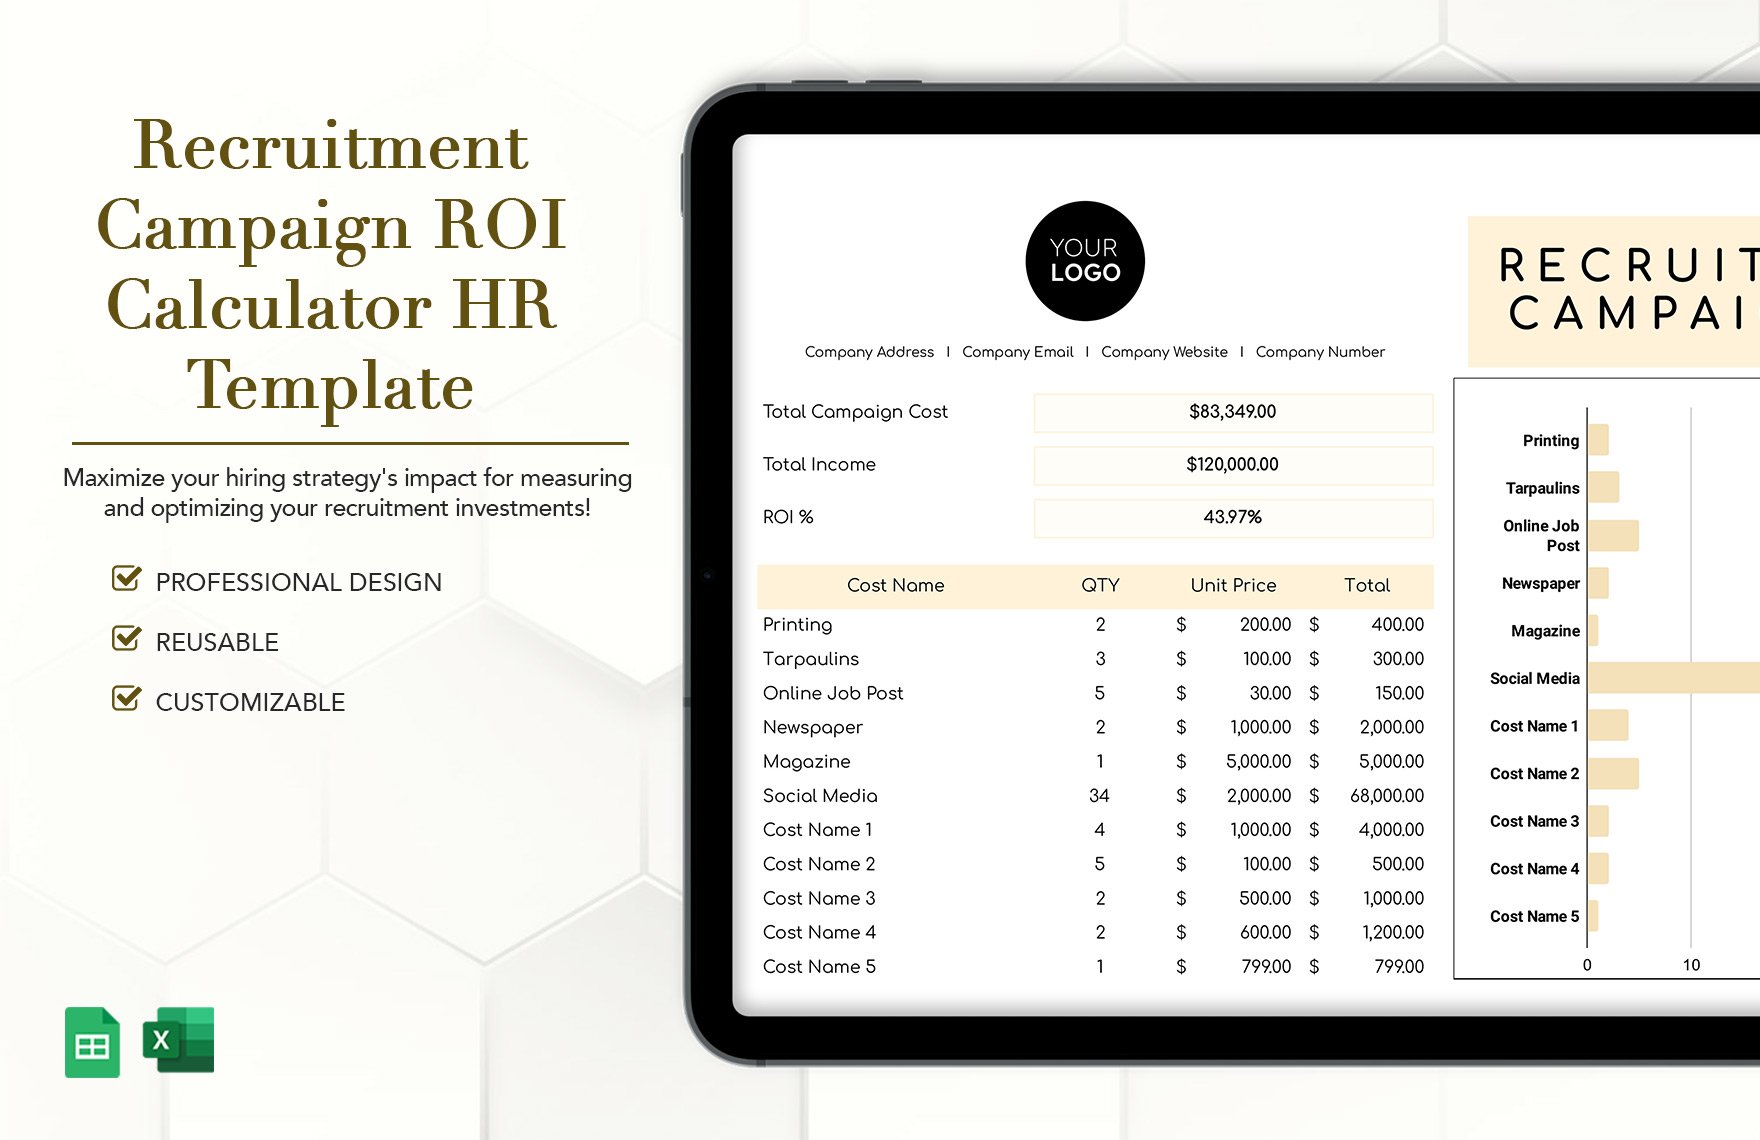 Recruitment Campaign ROI Calculator HR Template